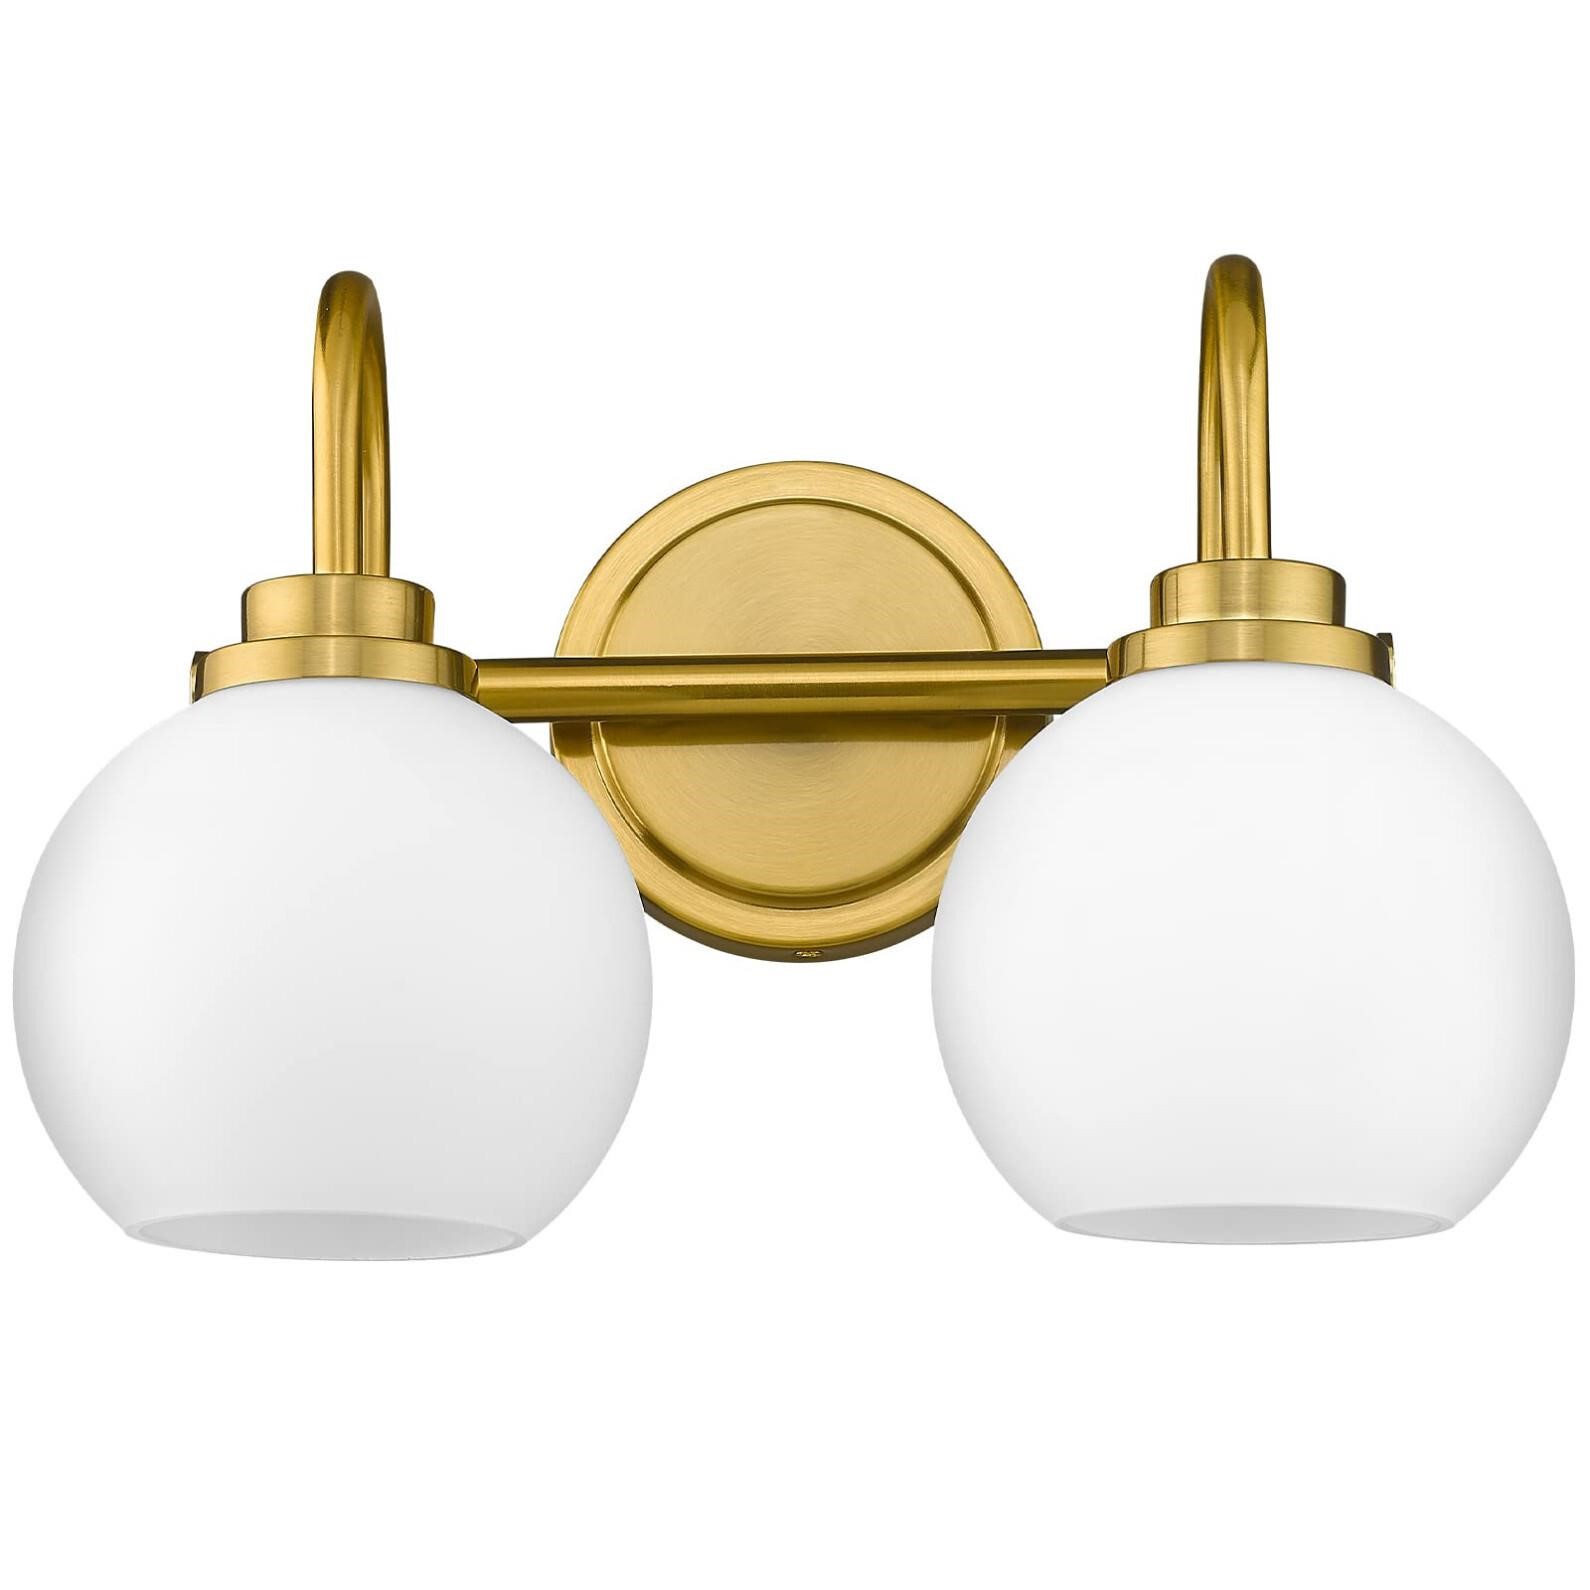 AKEZON Gold Bathroom Light Fixtures, 3 Light Gold